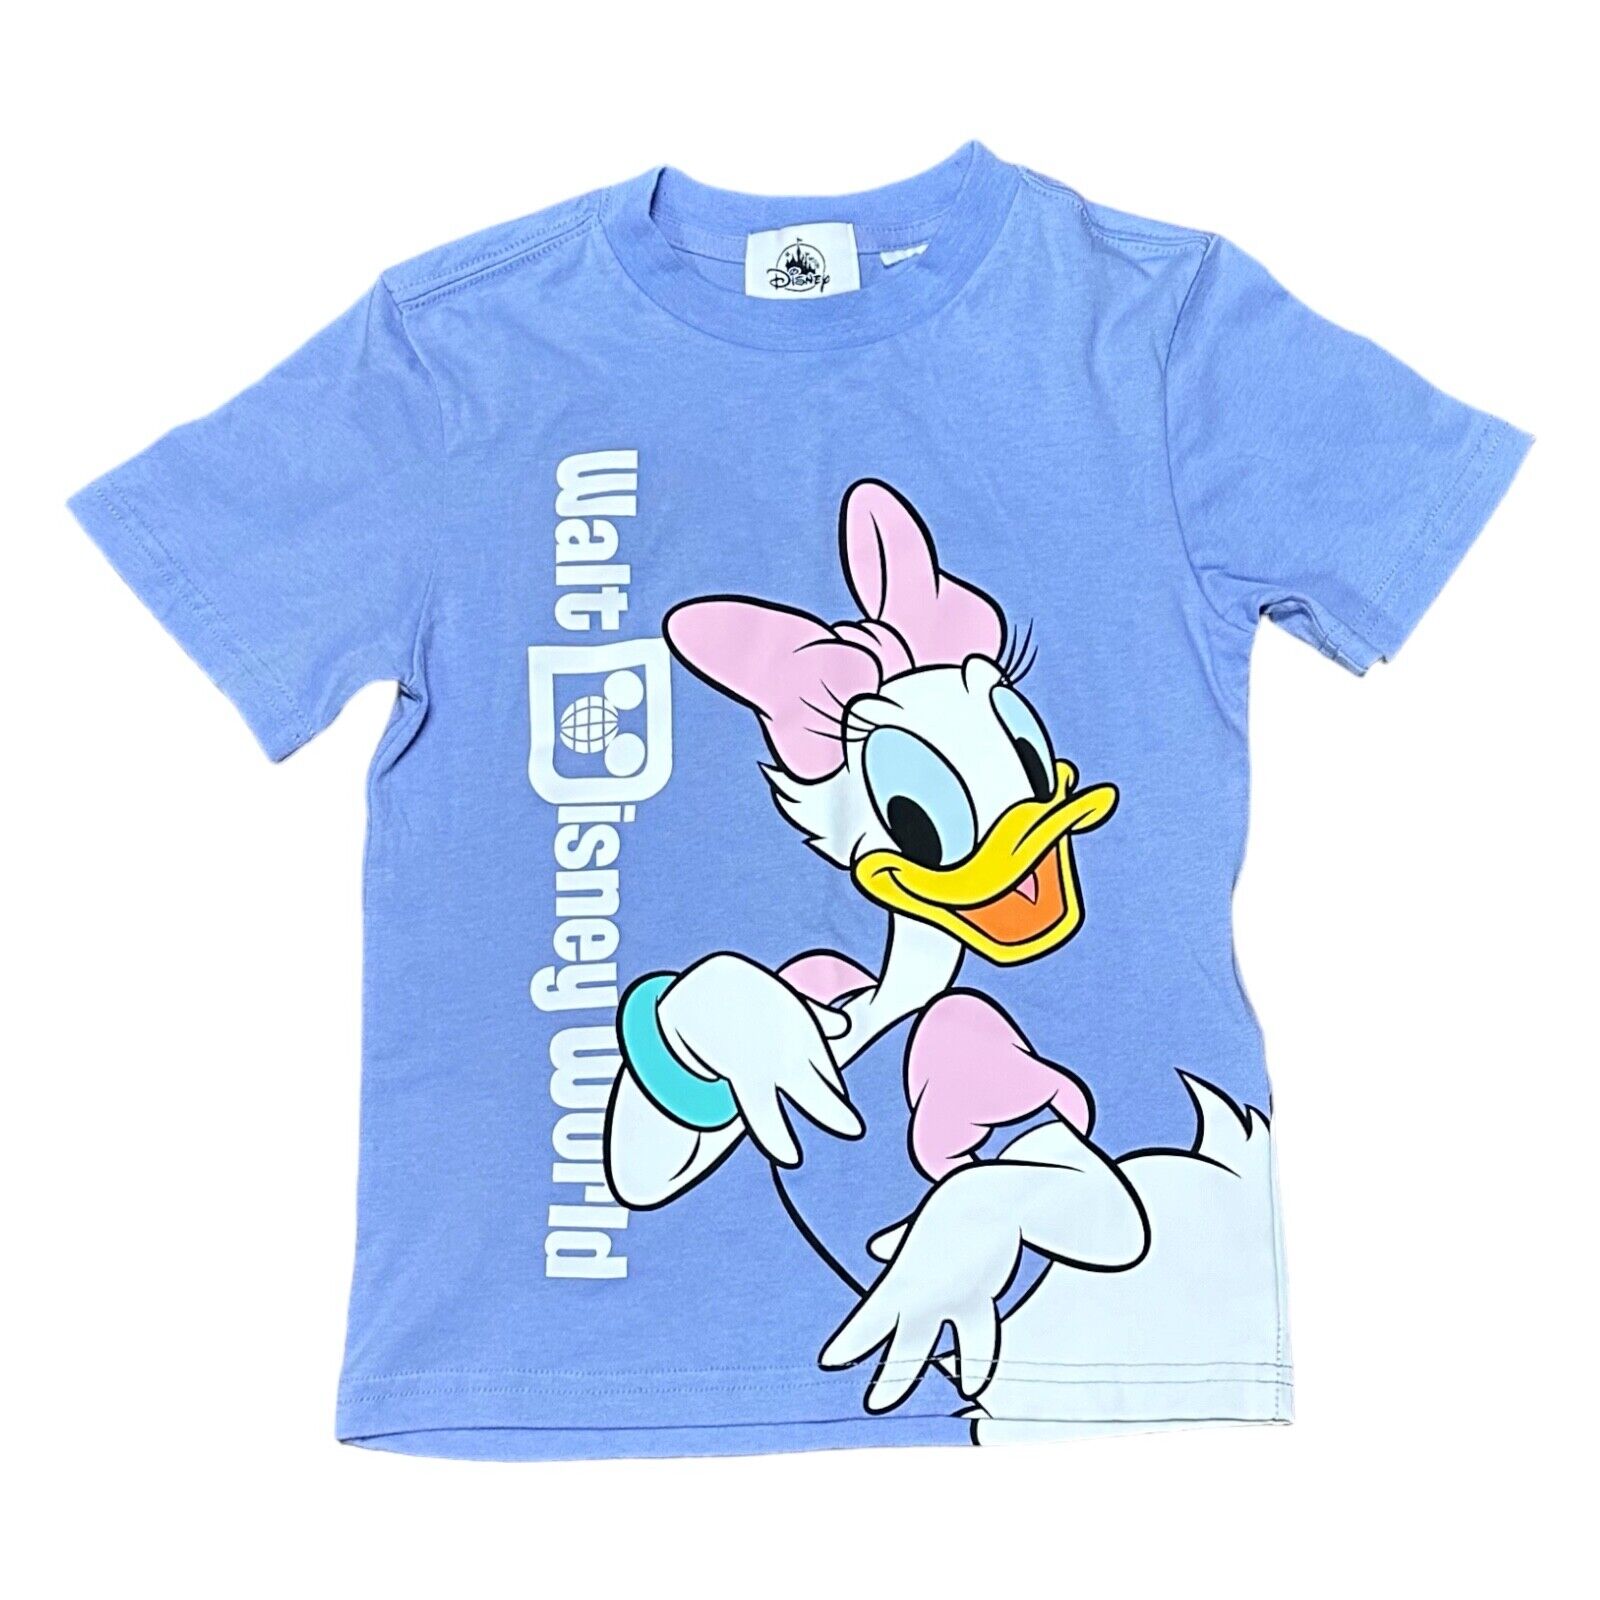 Disney Parks Walt Disney World Daisy Duck Back to Front Kids Shirt S (5/6) READ